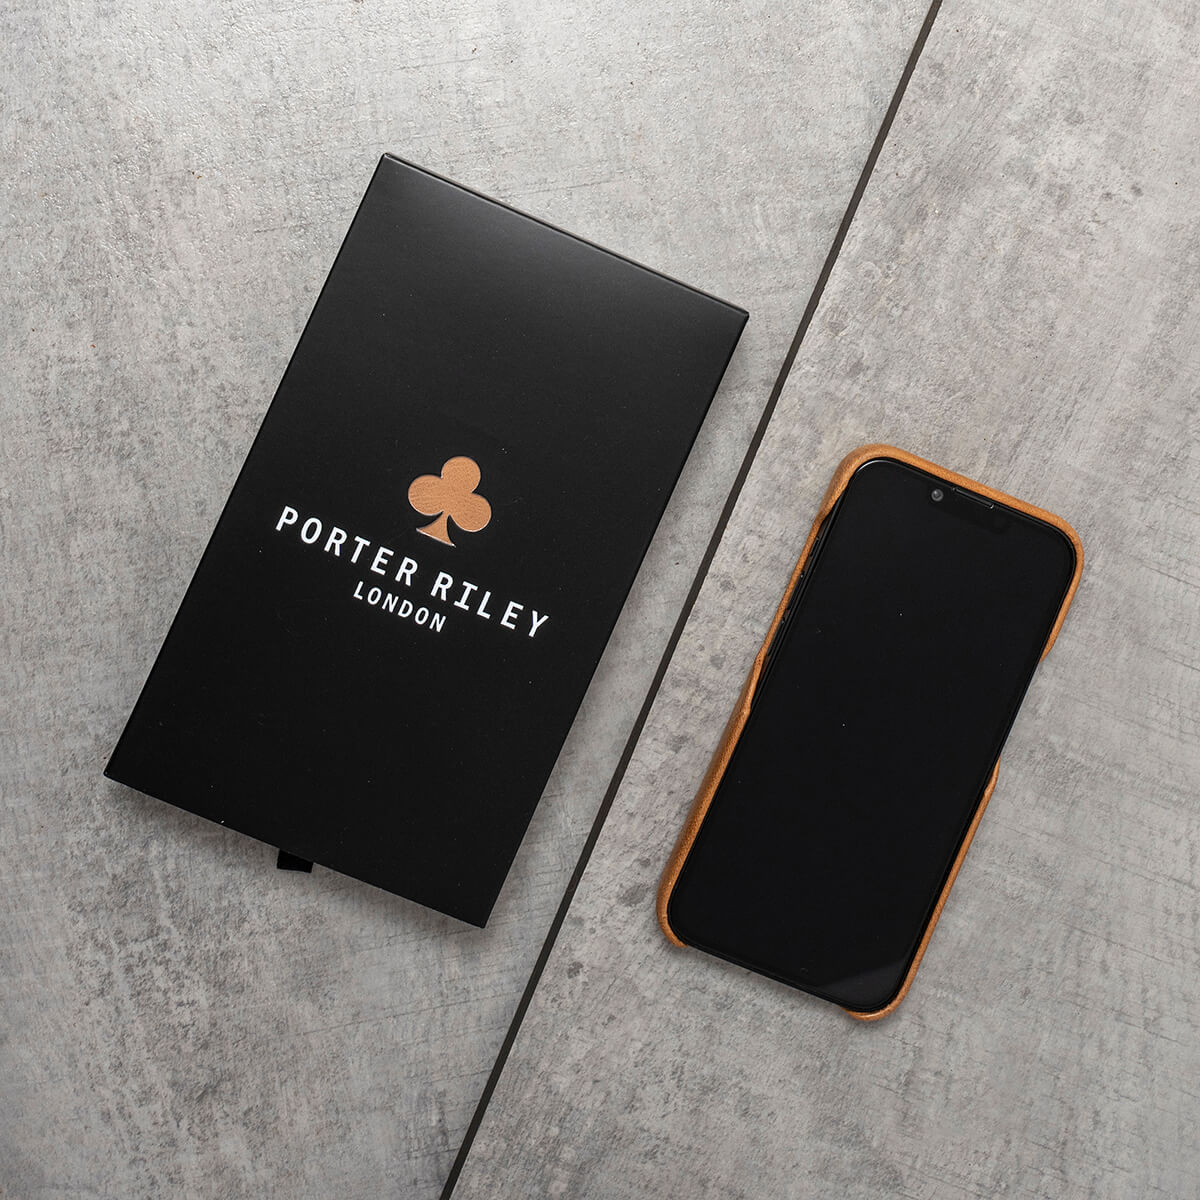 iPhone 13 Leather Case. Premium Slimline Back Genuine Leather Case (Tan)